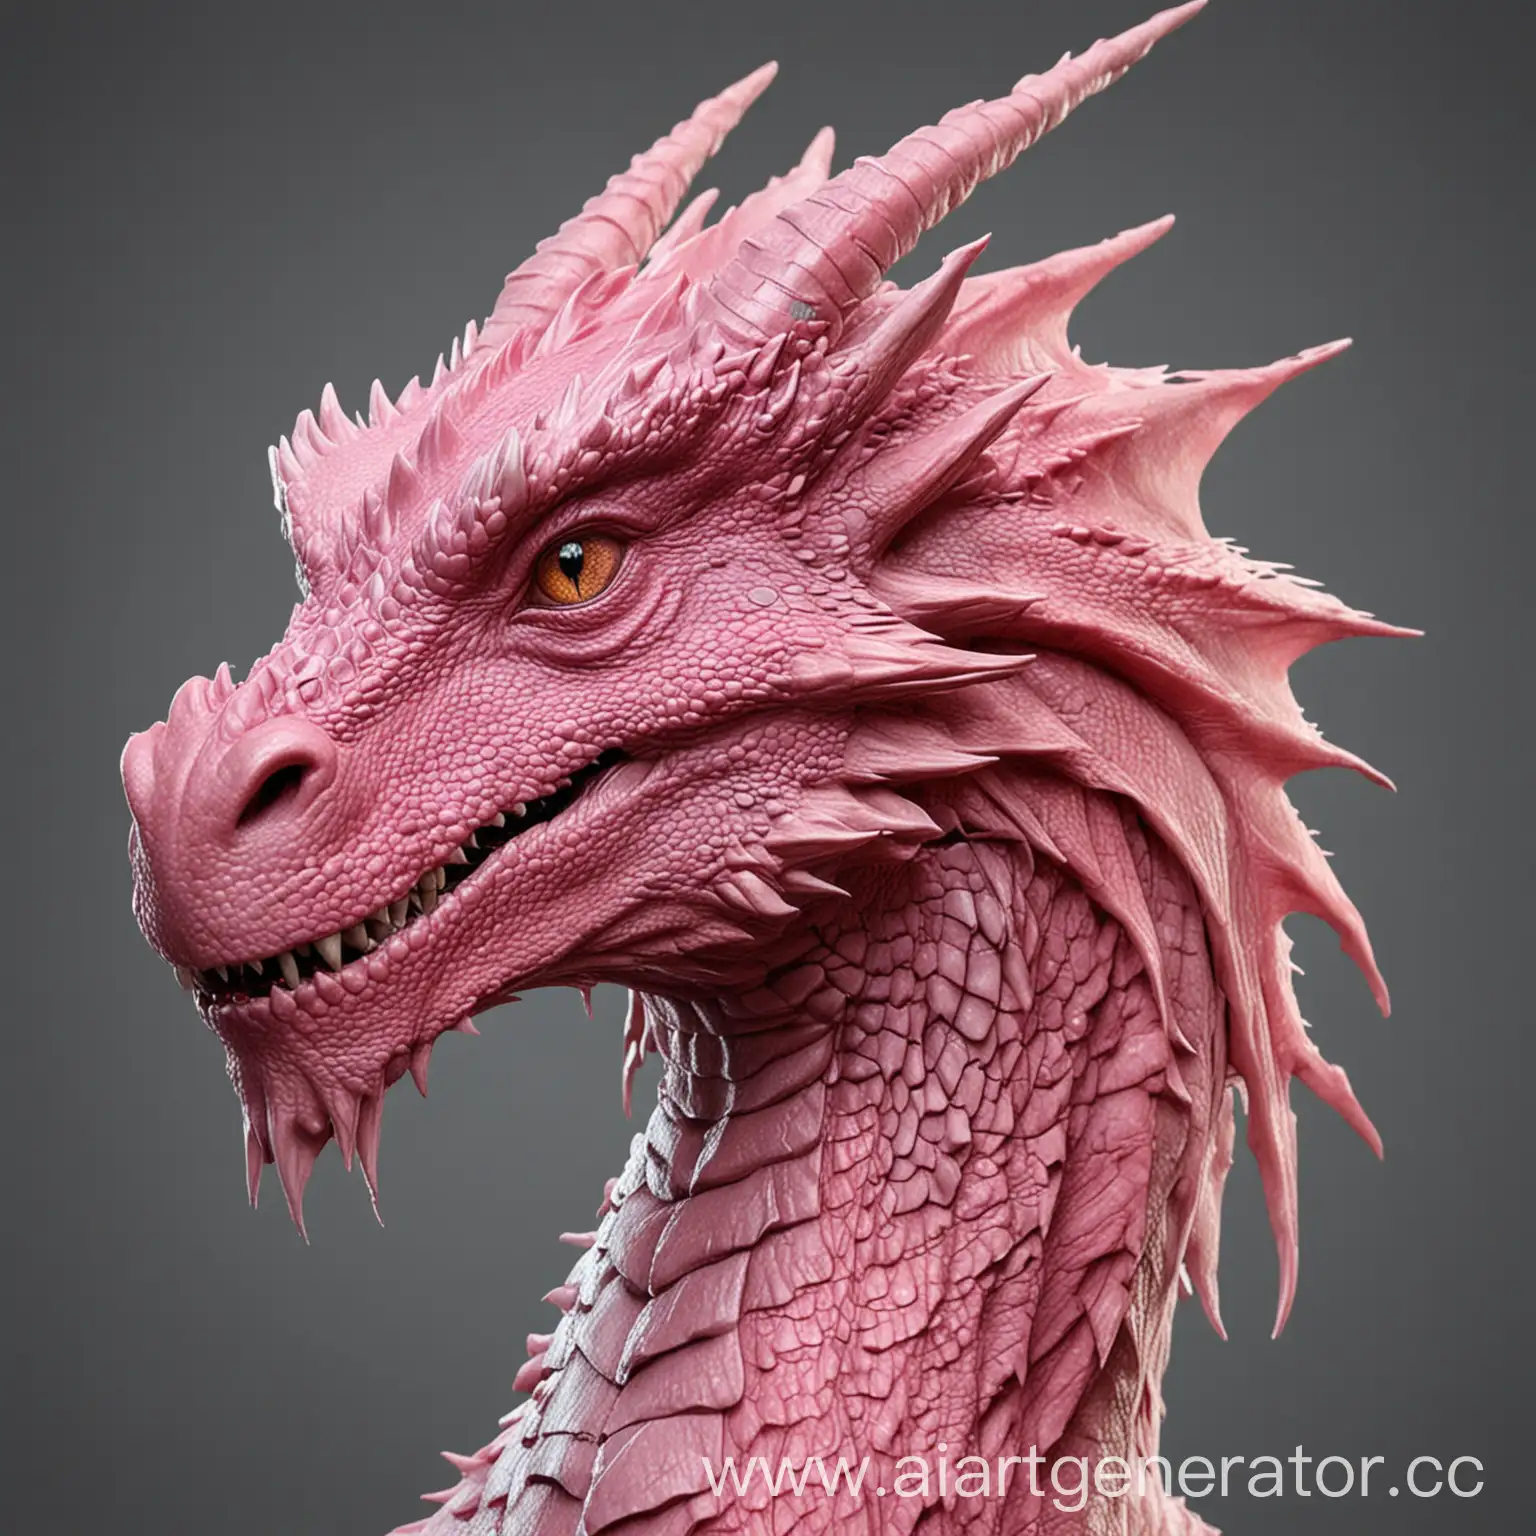 реалистичный дракон, розового цвета, без рогов.